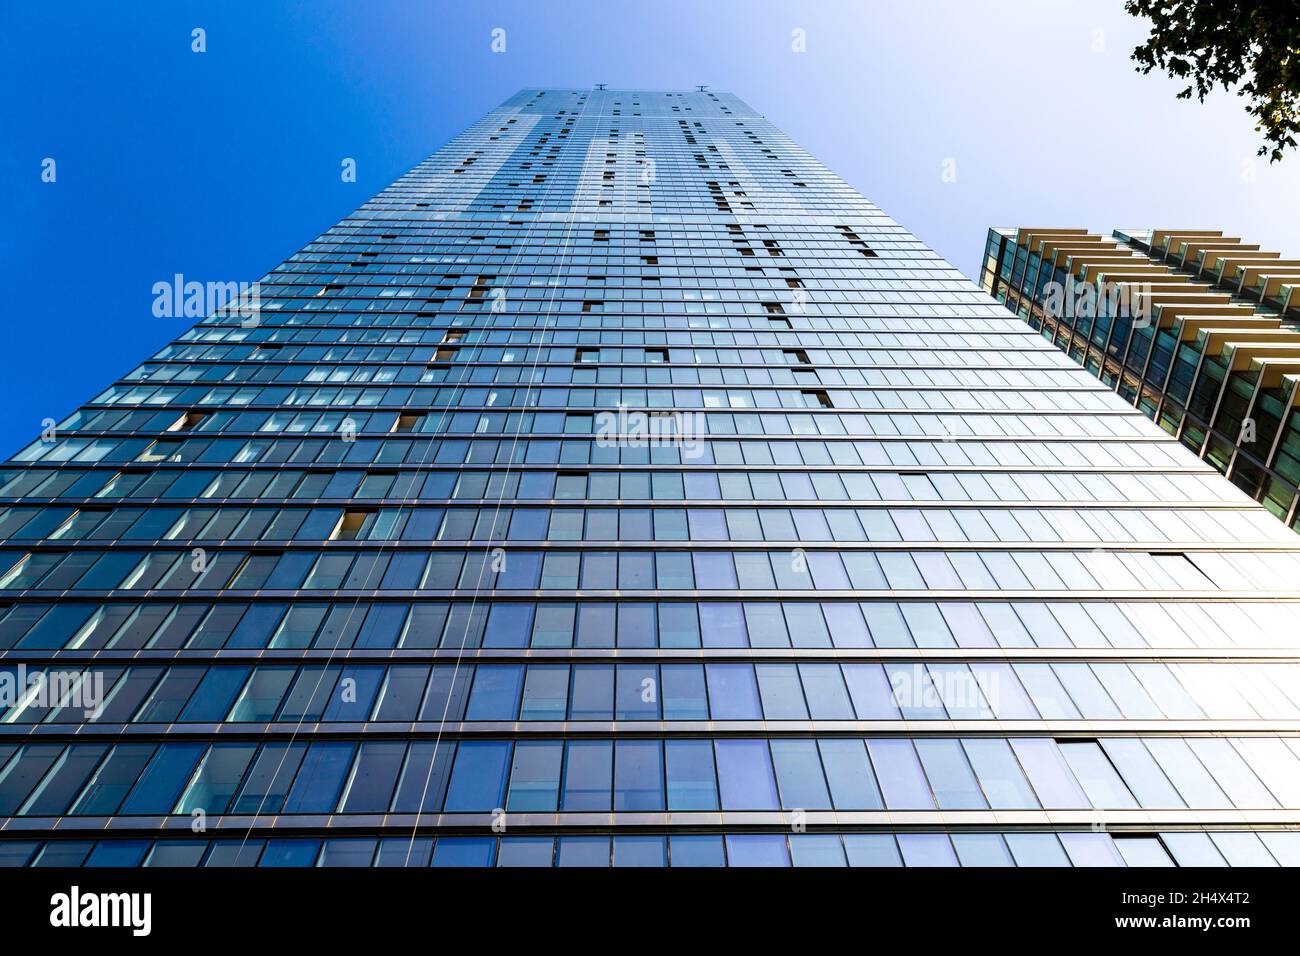 Glass facade of residential skyscraper Landmark Pinnacle in CanaryWharf, London, UK Stock Photo